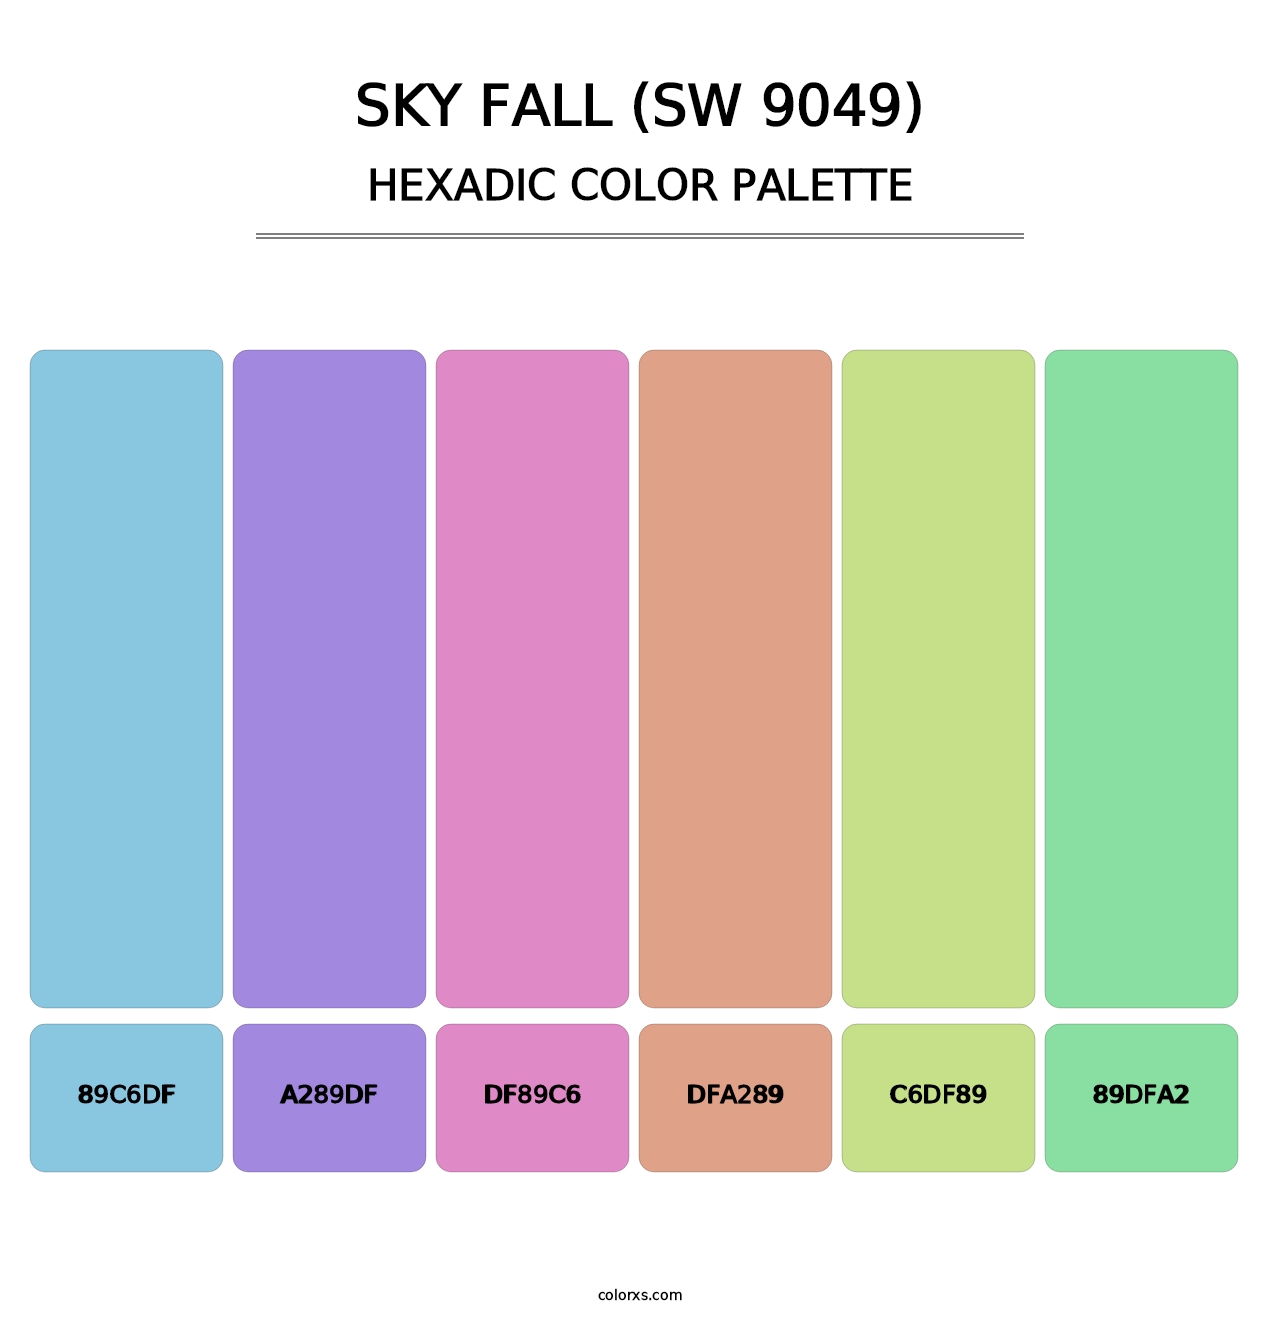 Sky Fall (SW 9049) - Hexadic Color Palette